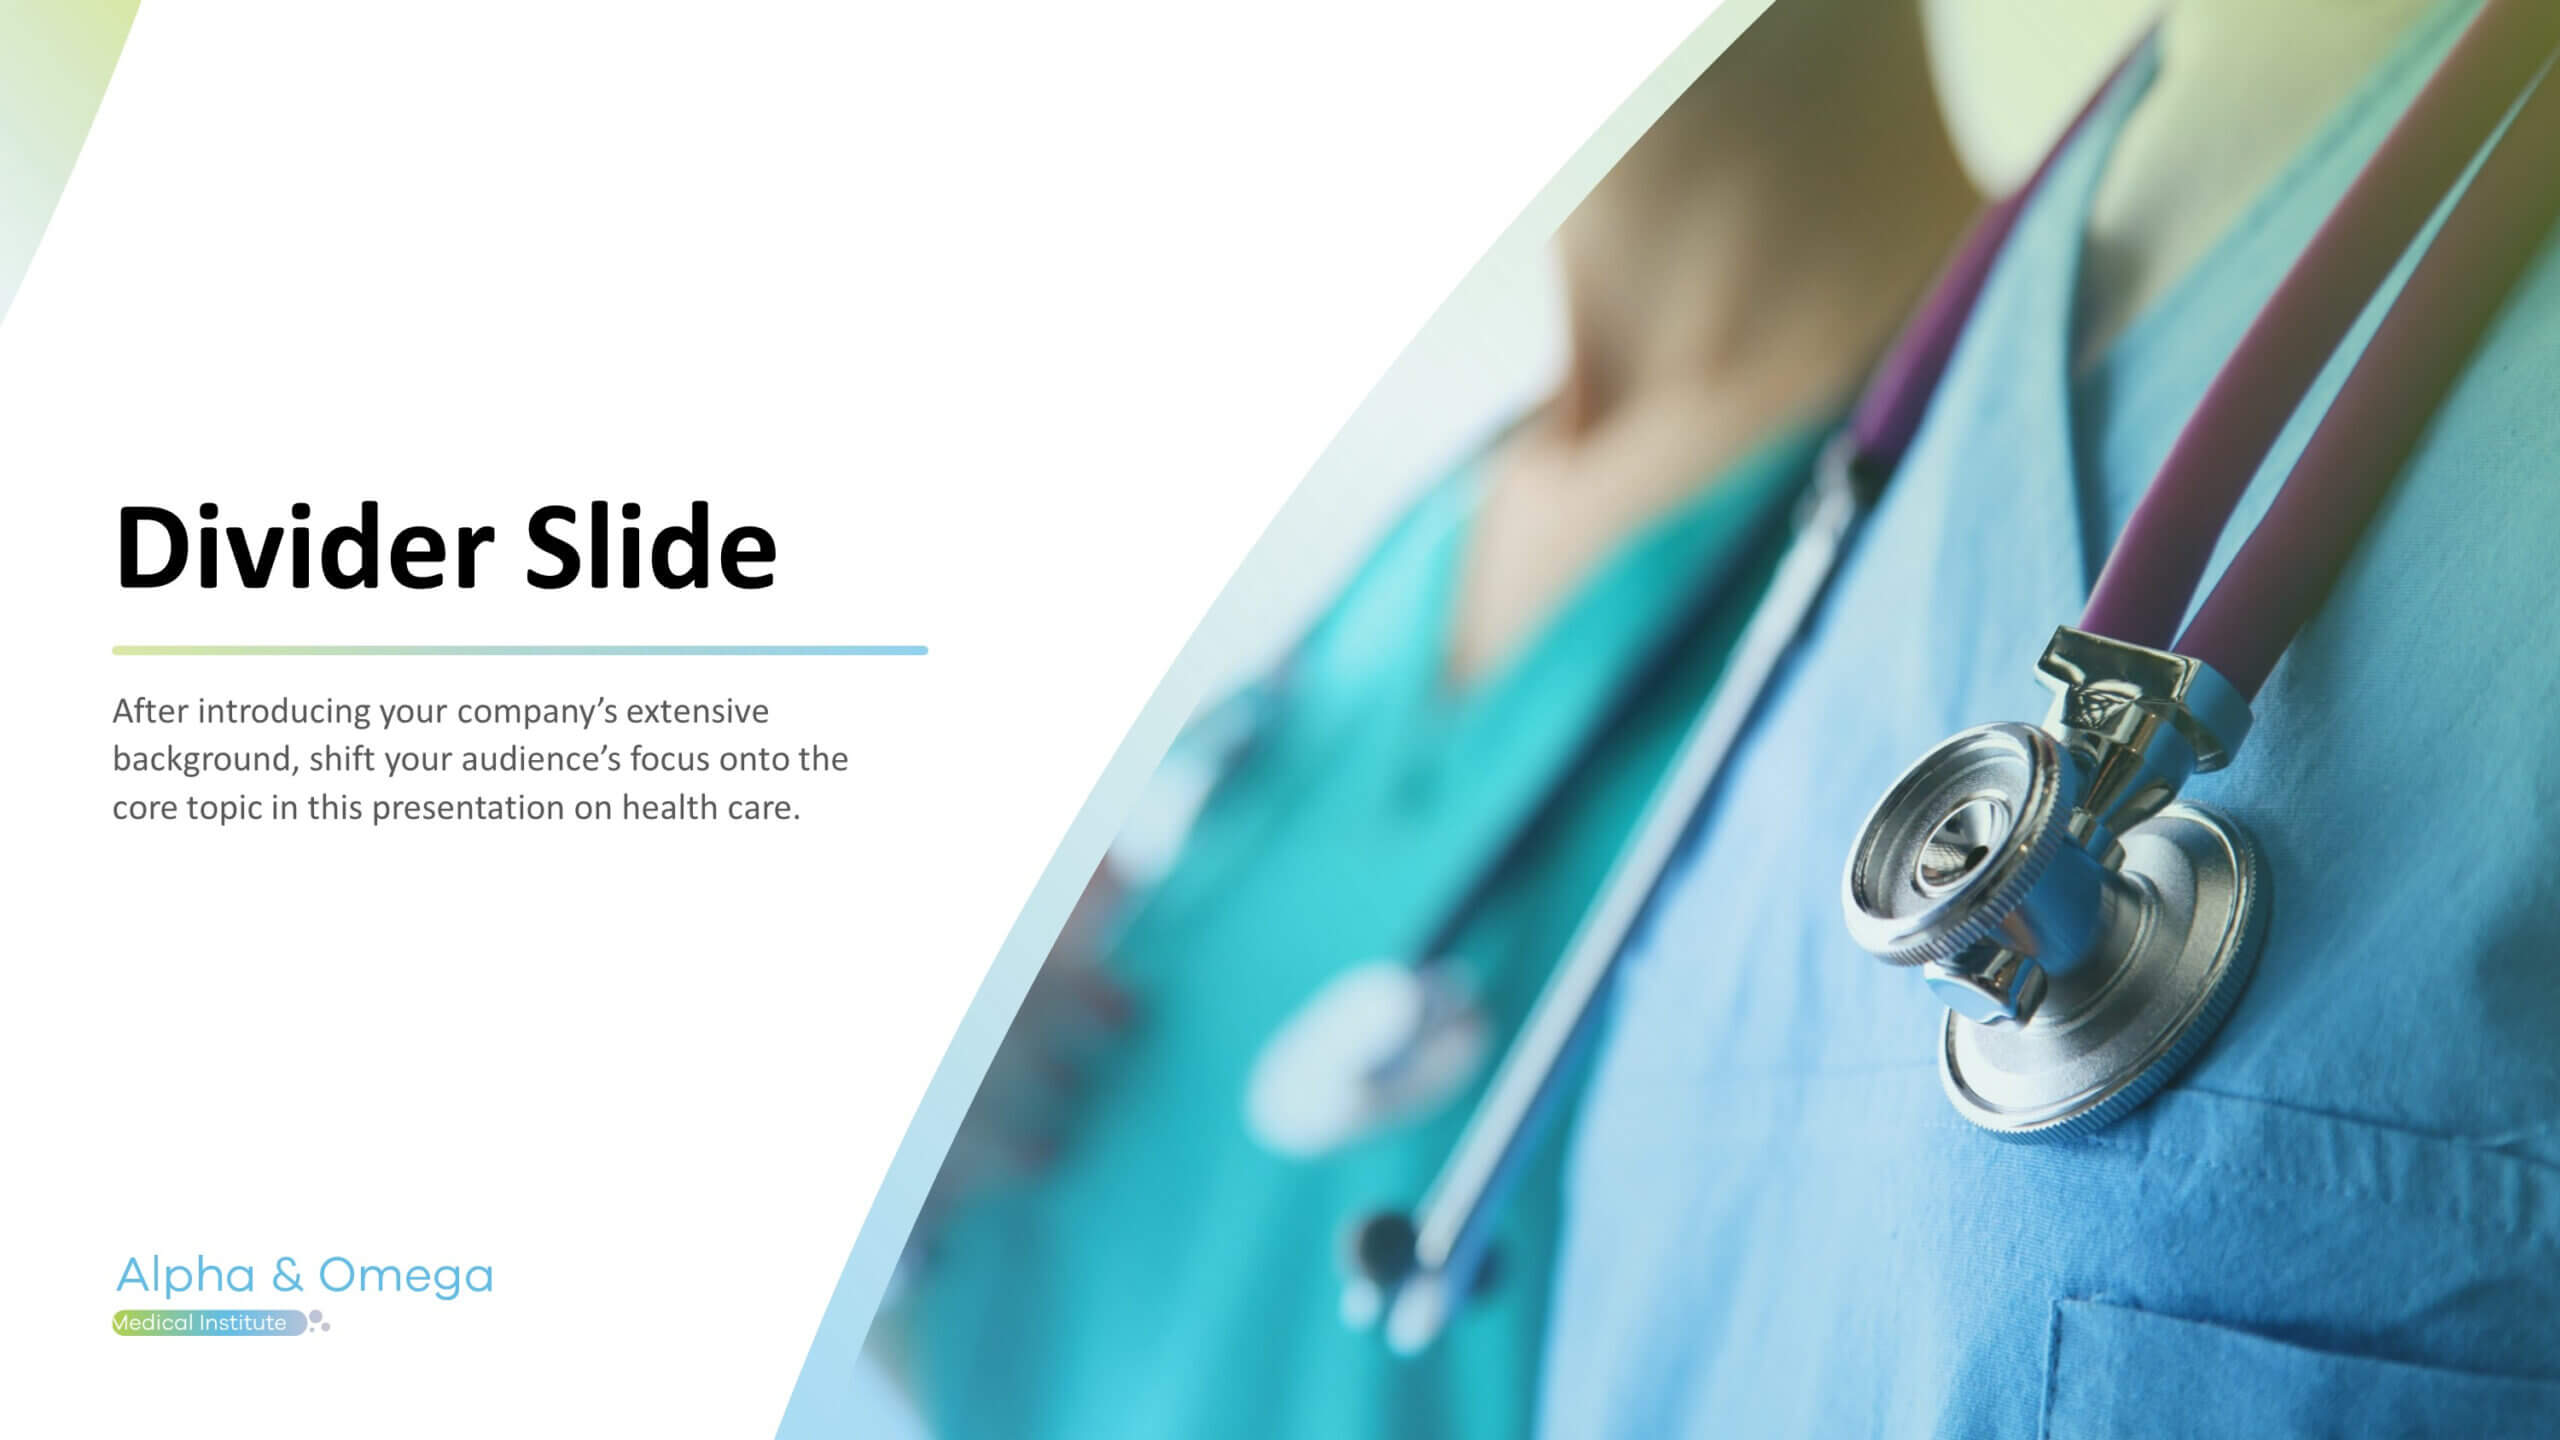 Nursing Diagnosis Premium Powerpoint Template - Slidestore Within Free Nursing Powerpoint Templates